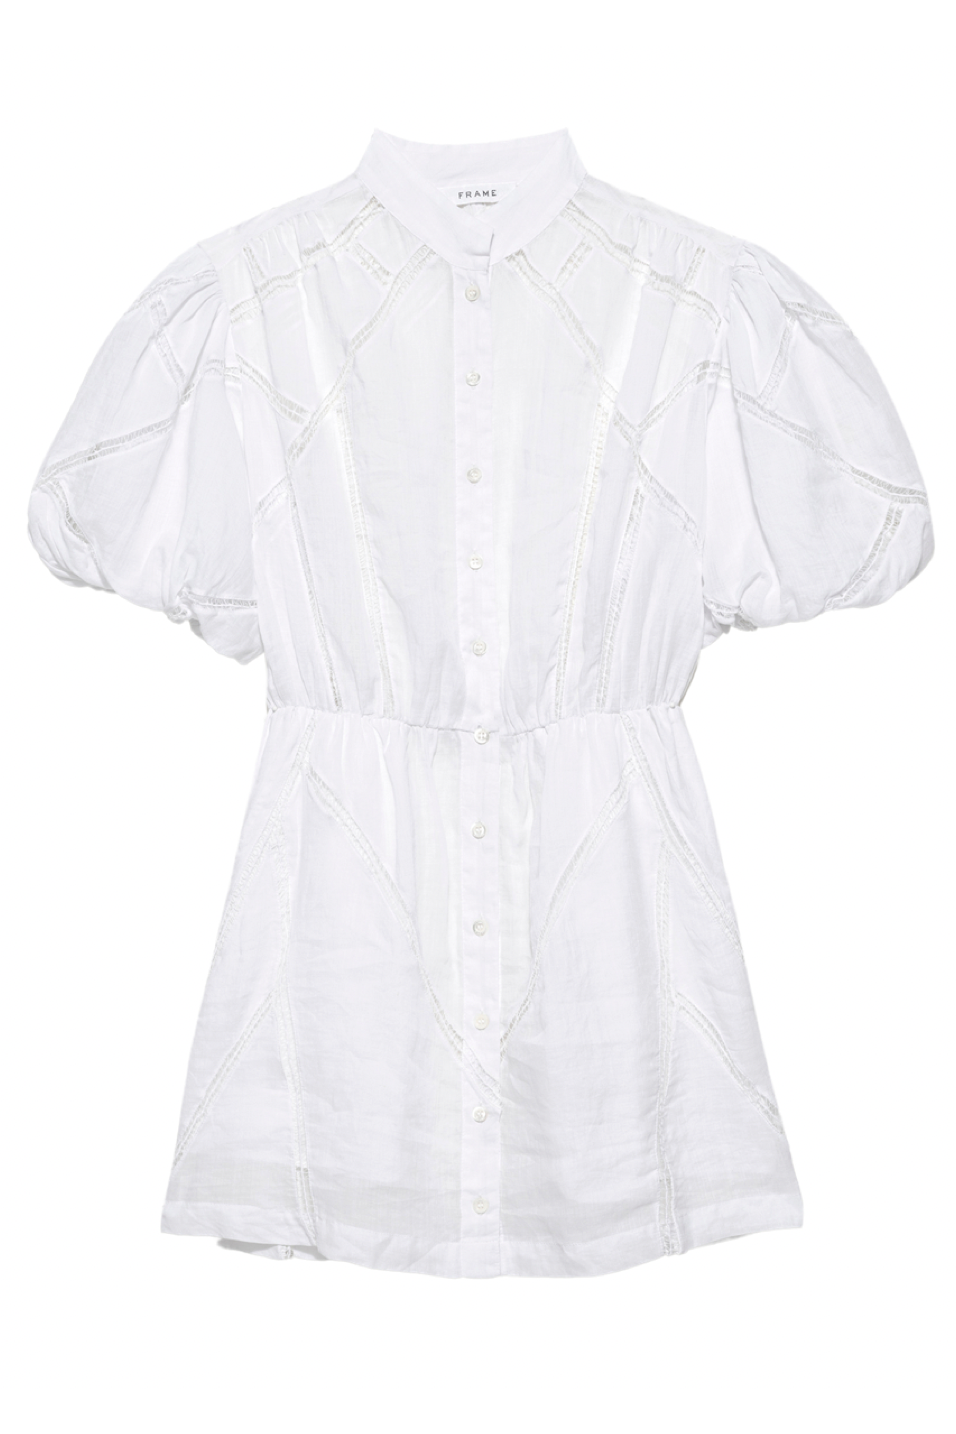 Lace Inset Drama Sleeve Shirt - Mint